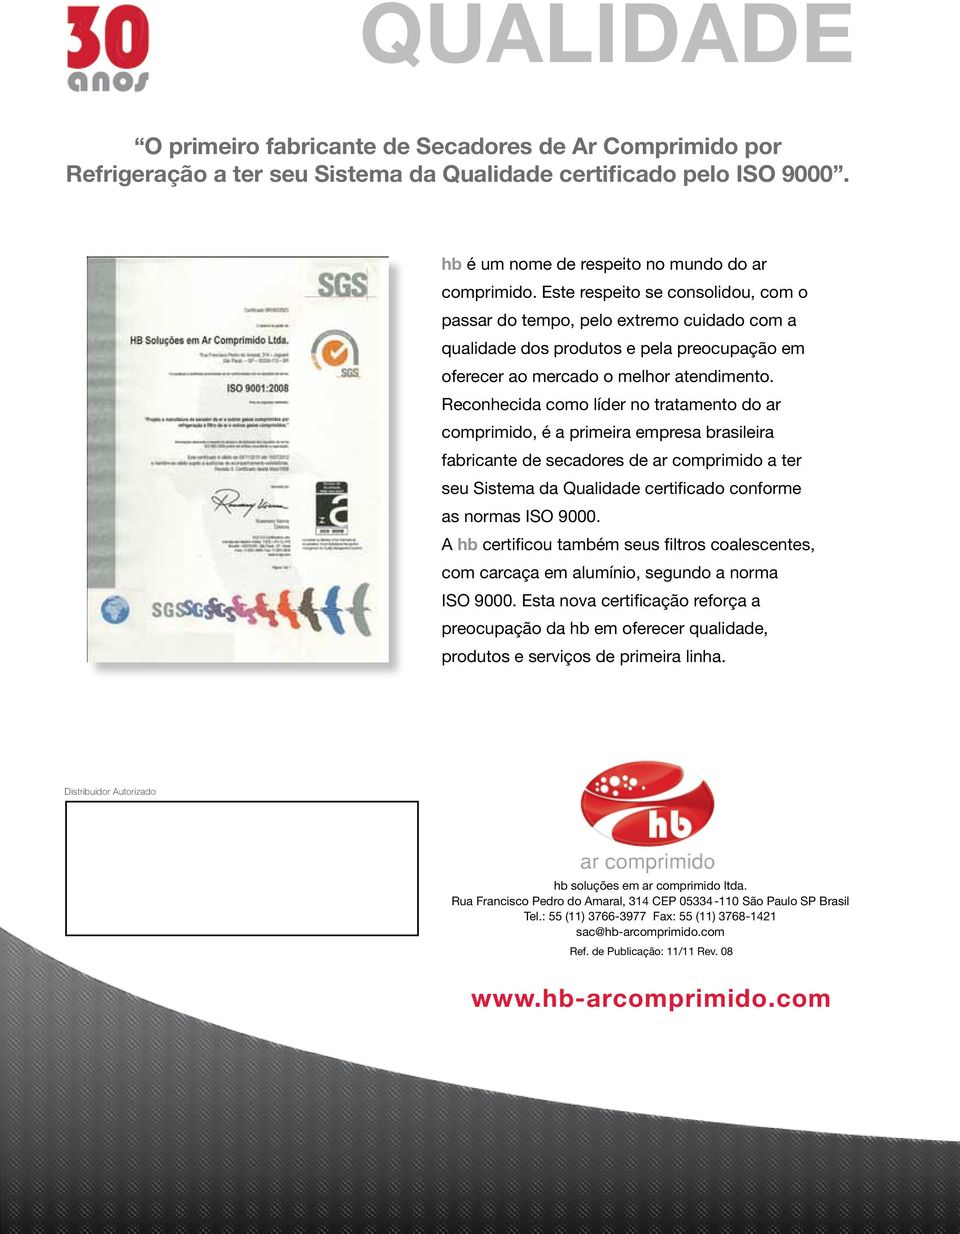 Reconhecida como líder no tratamento do ar comprimido, é a primeira empresa brasileira fabricante de secadores de ar comprimido a ter seu Sistema da Qualidade certificado conforme as normas ISO 9000.